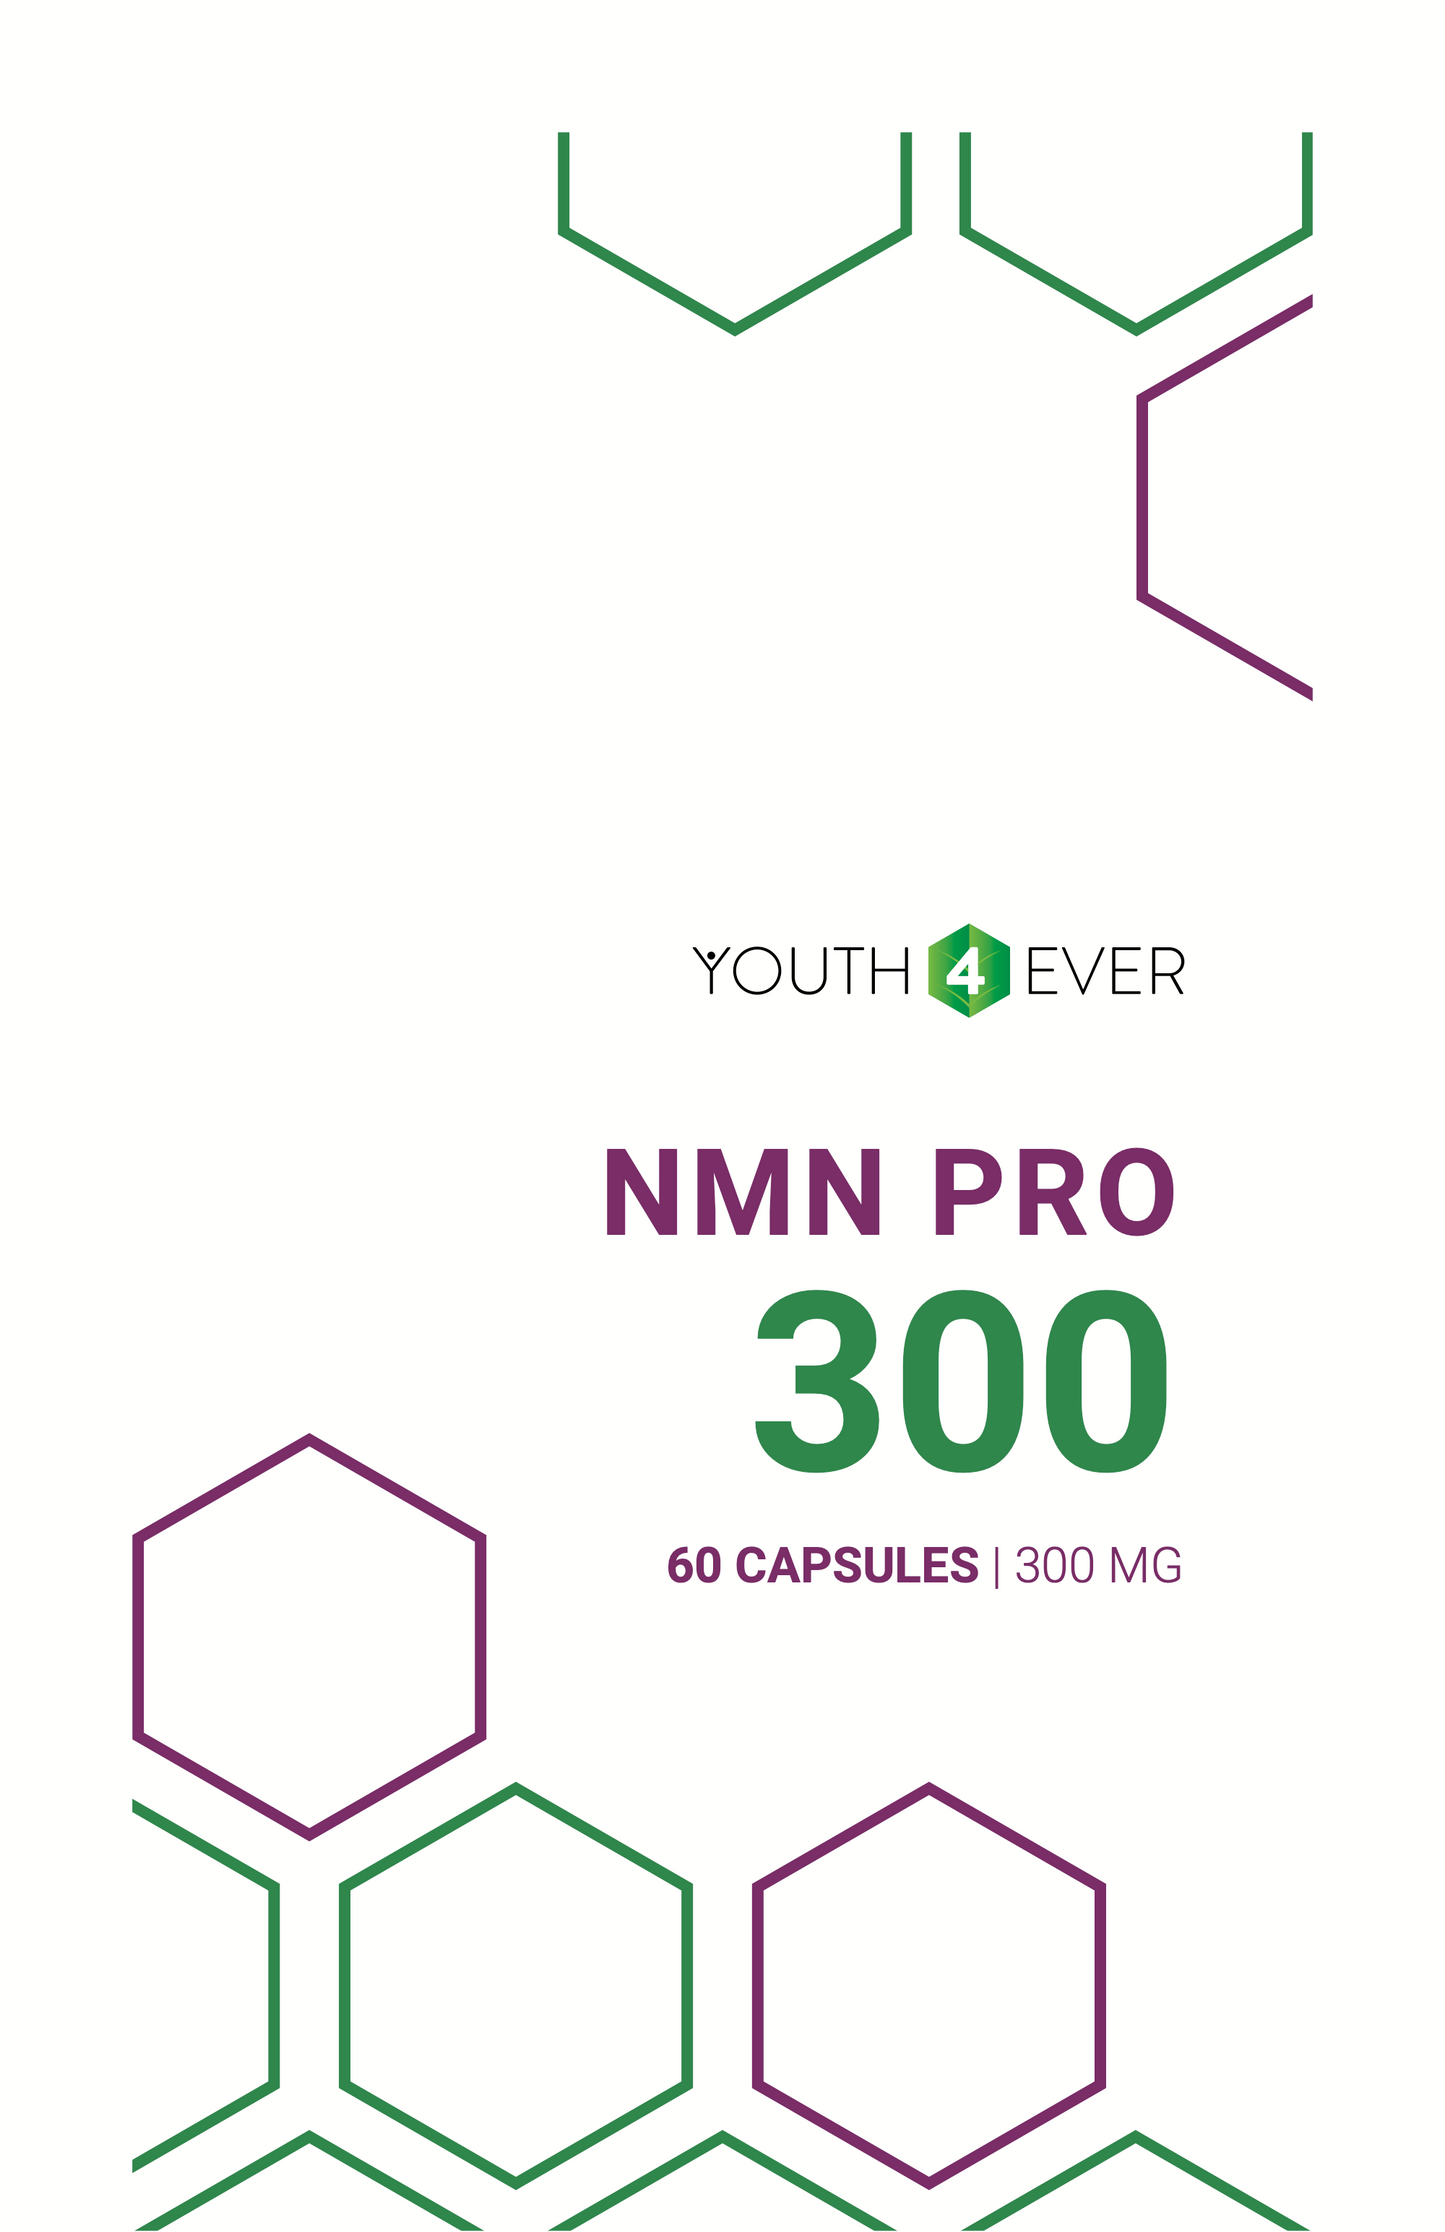 NMN PRO 300 - 90 Gramm NMN - 99 % rein - 300 Kapseln